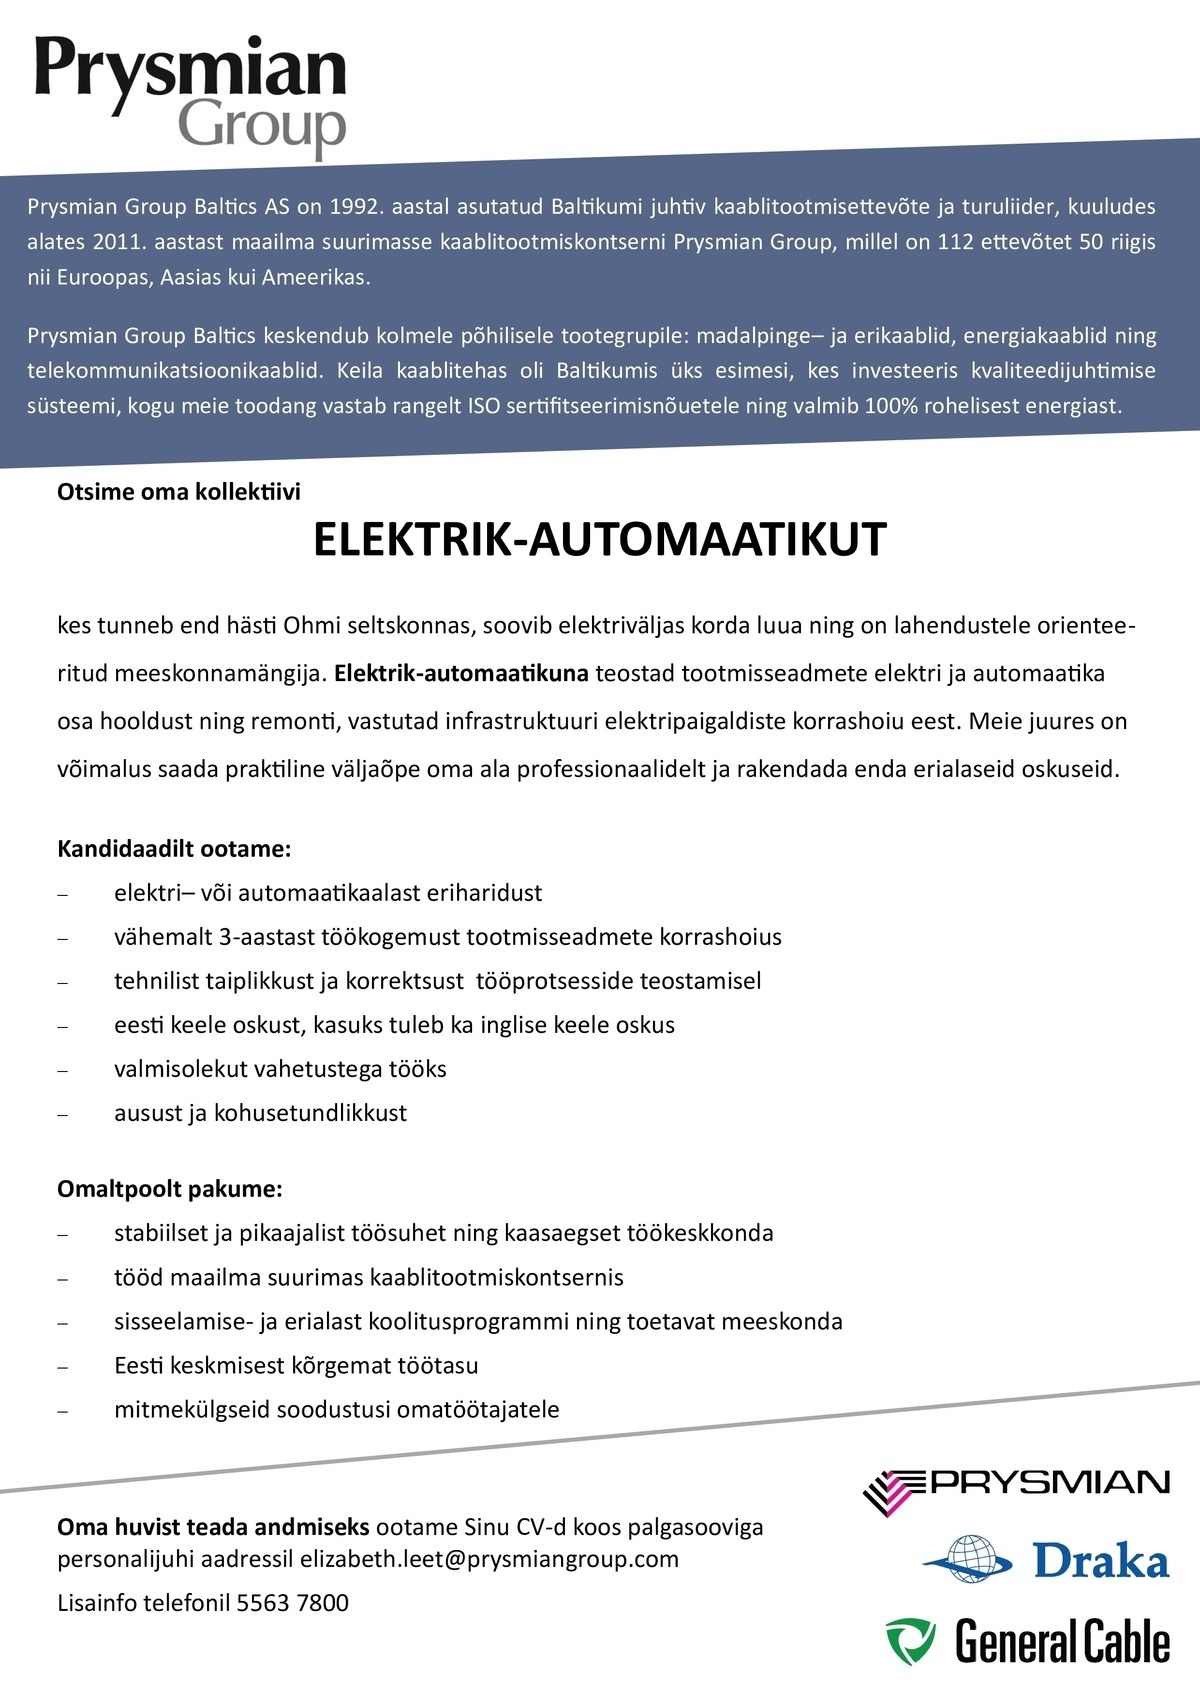 Prysmian Group Baltics AS Elektrik-automaatik